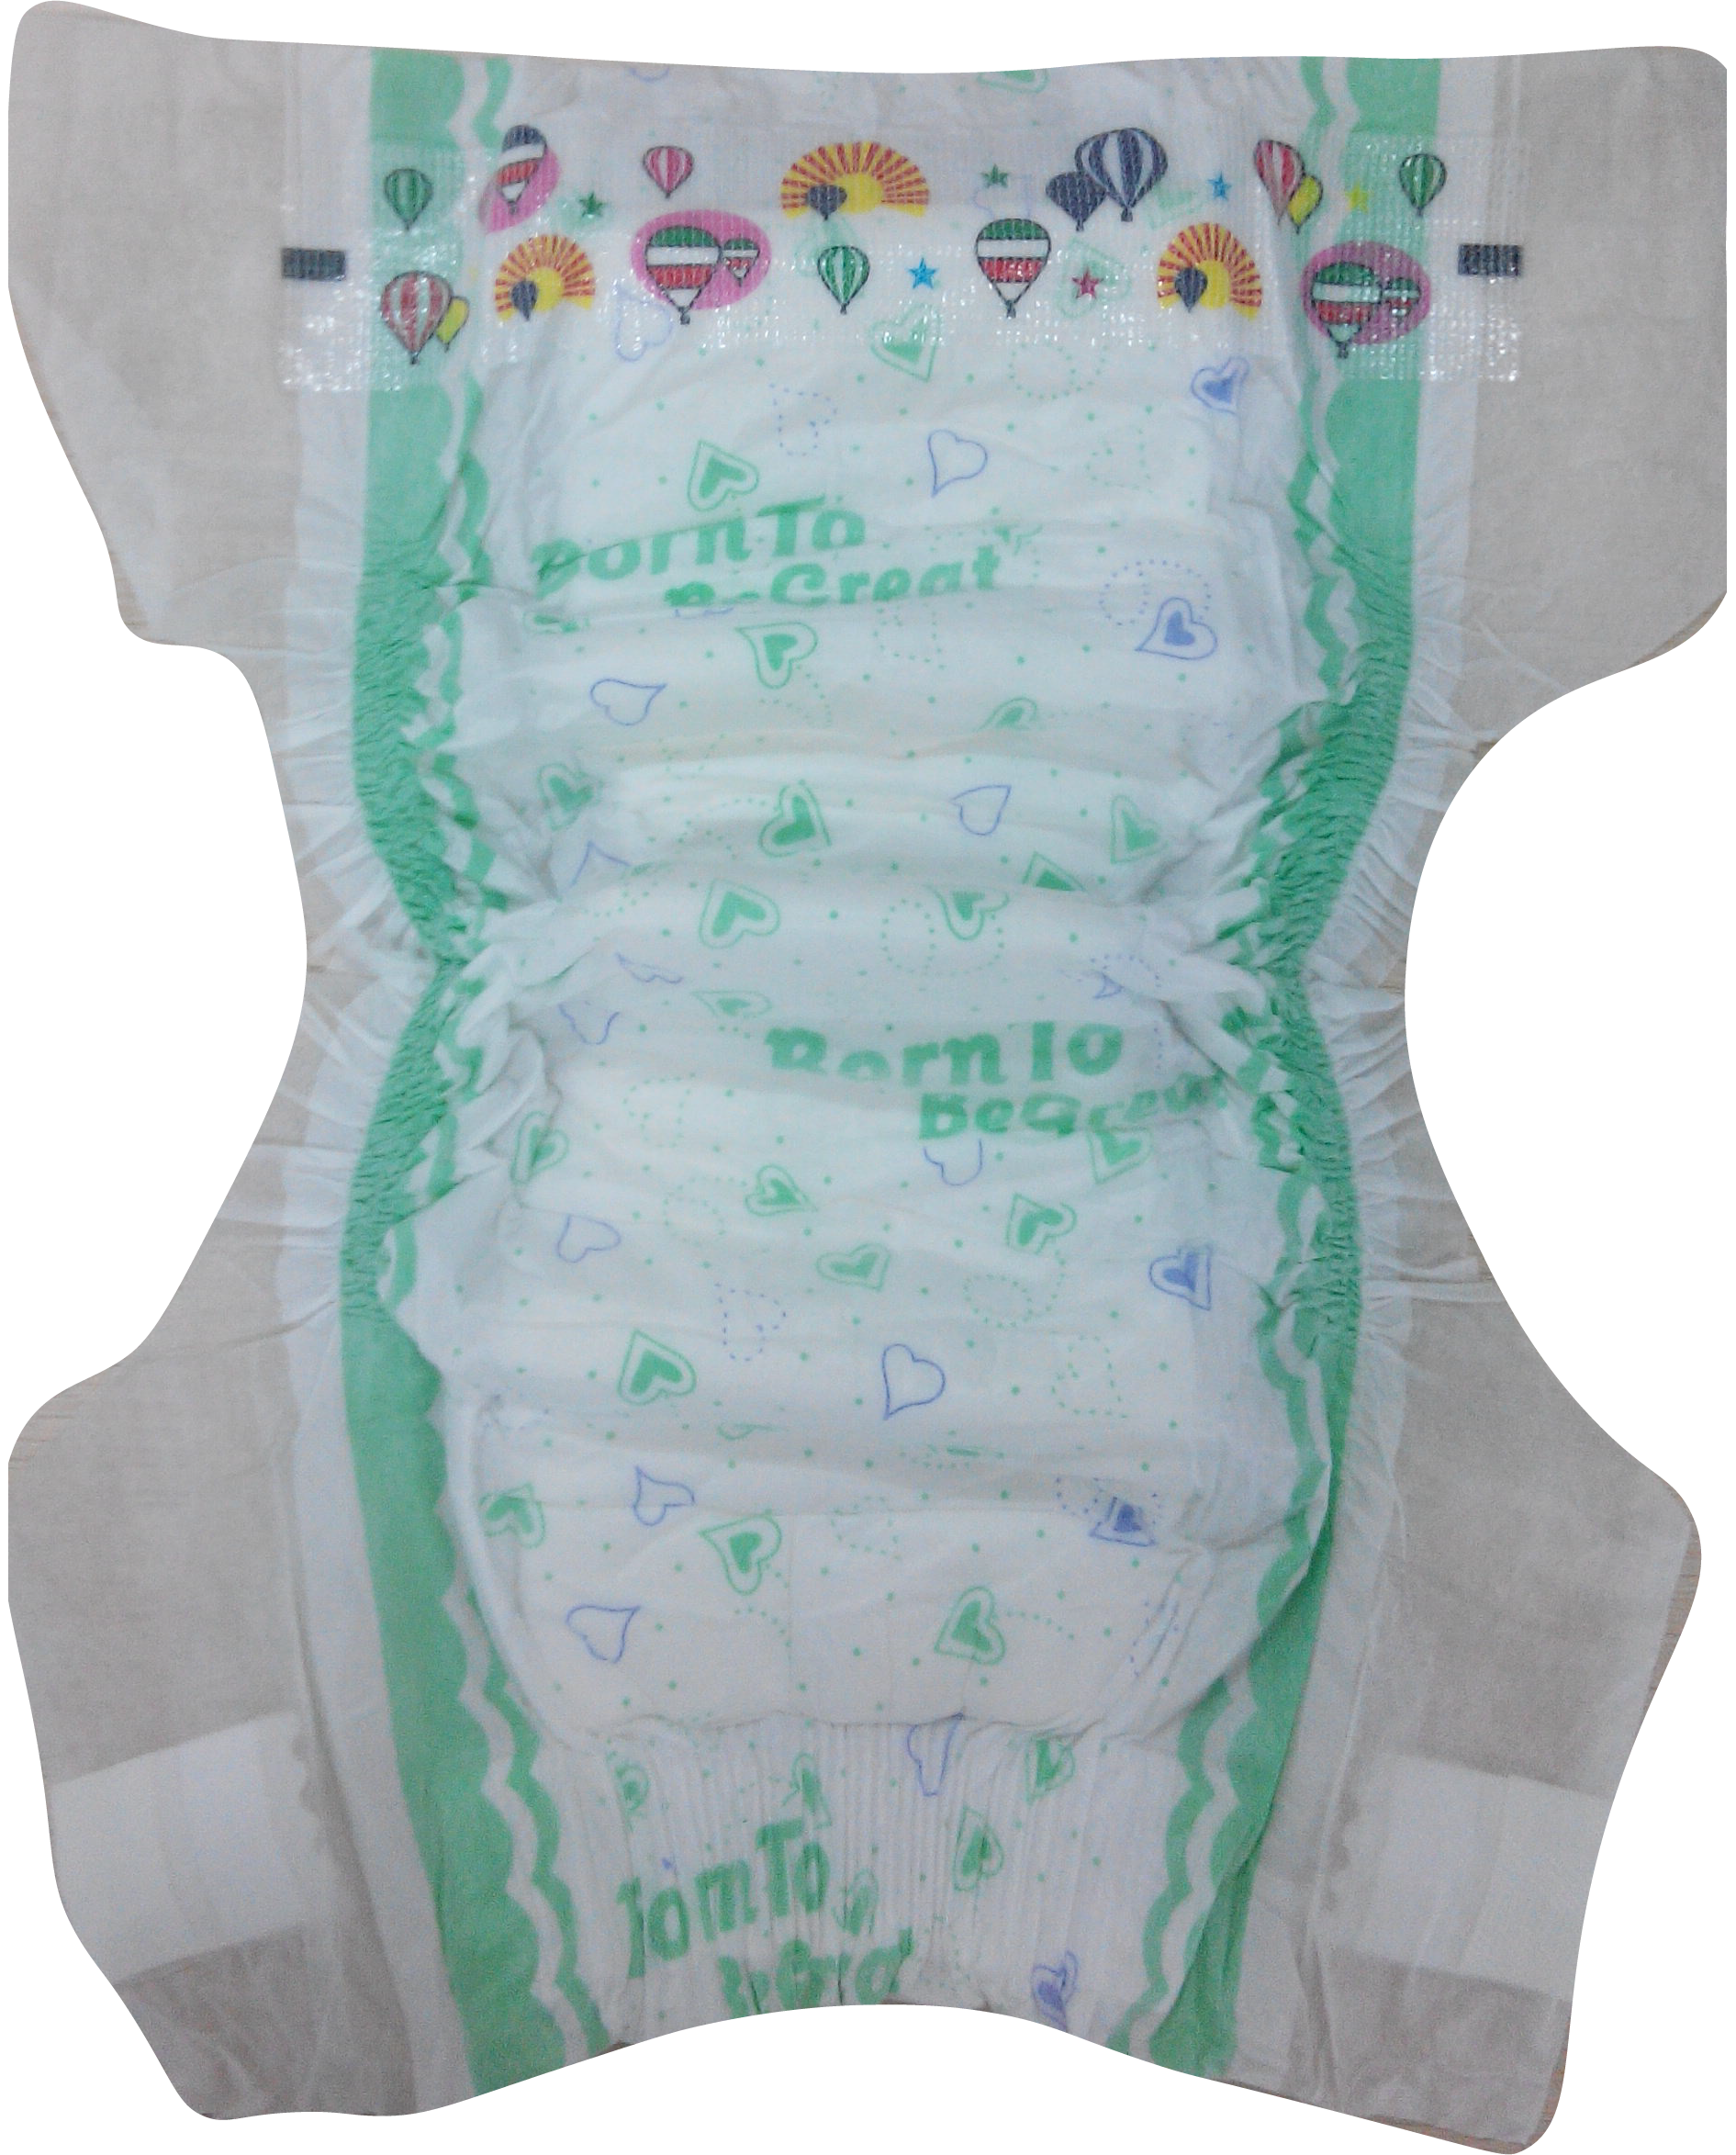 BornToBeGreat - Baby Diaper - Europe "Bulk" - Shop face masks online, Triple layer filtered face masks, Feminine care, baby care